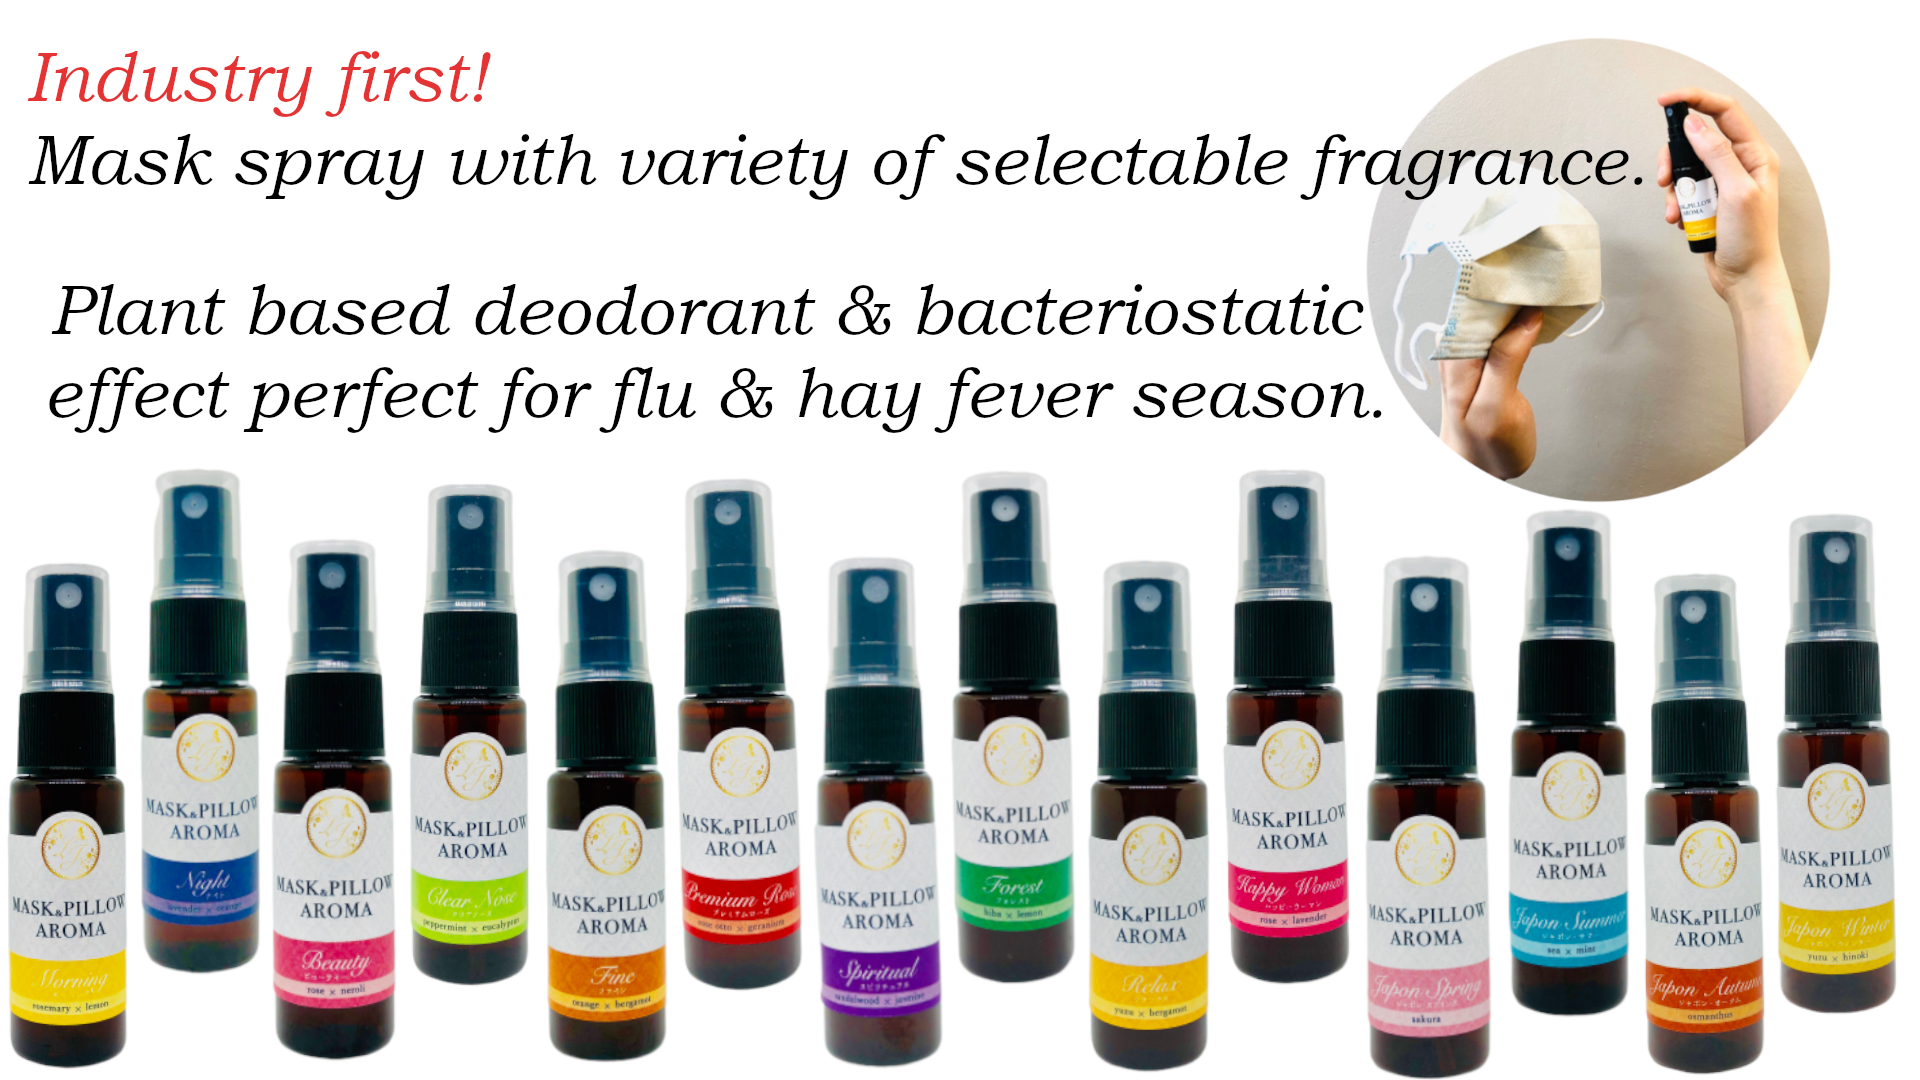 Best selling mask spray with elegant fragrances!